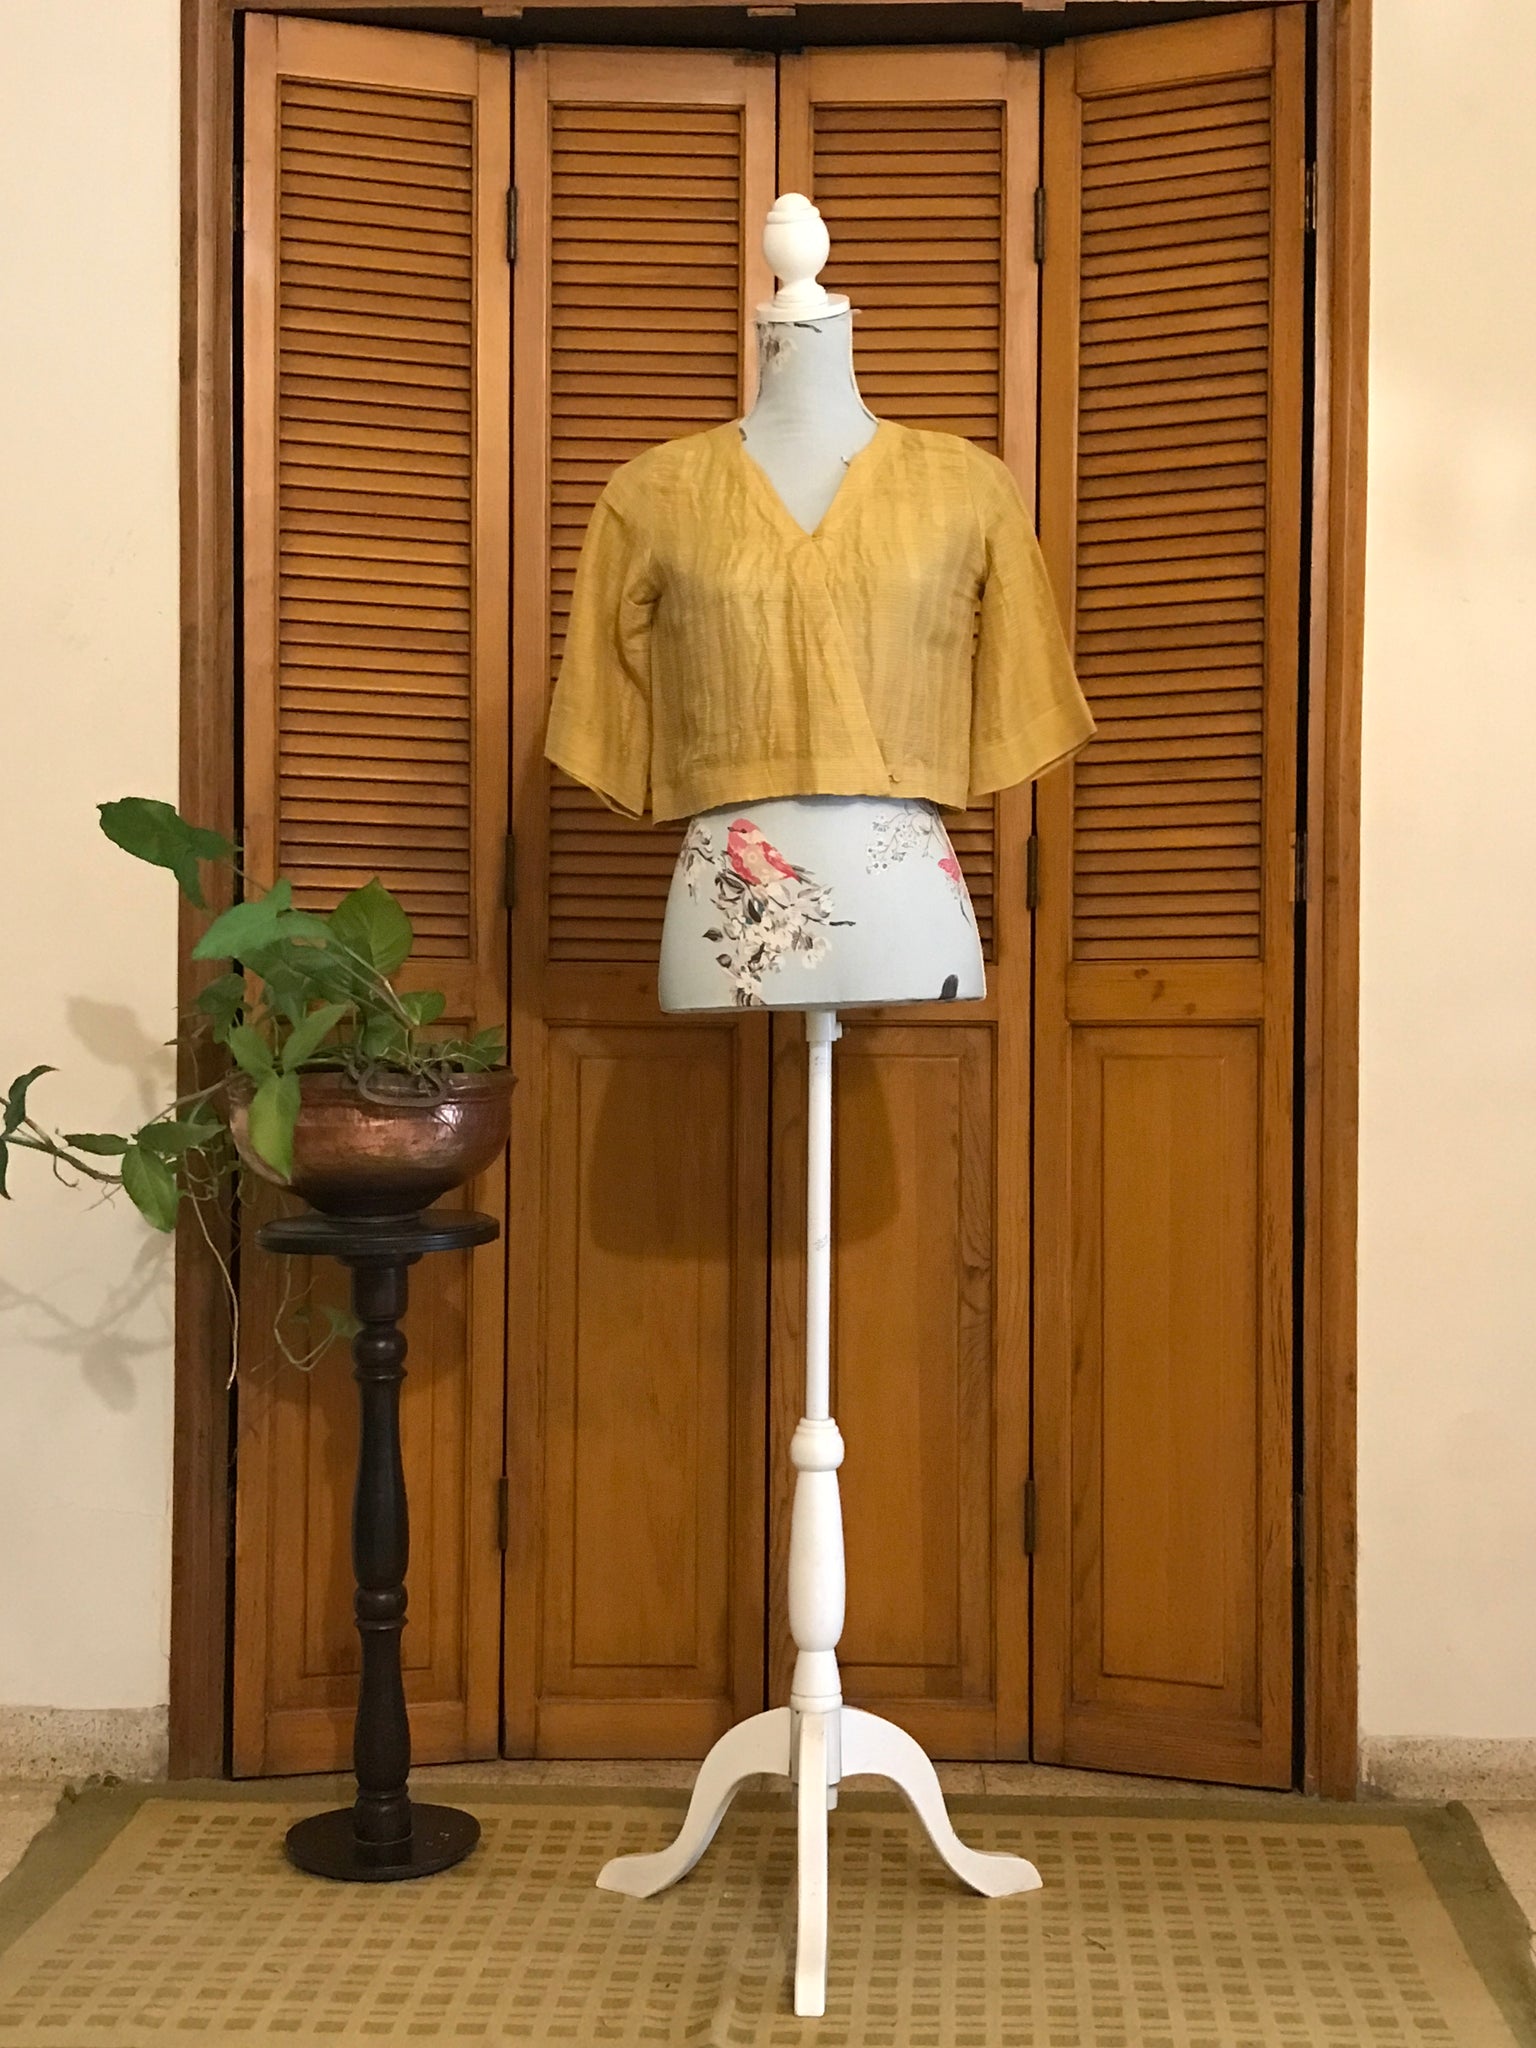 Overlapped Saree Blouse / Crop Top - Mustard Yellow Color- Linen Silk Zari Fabric